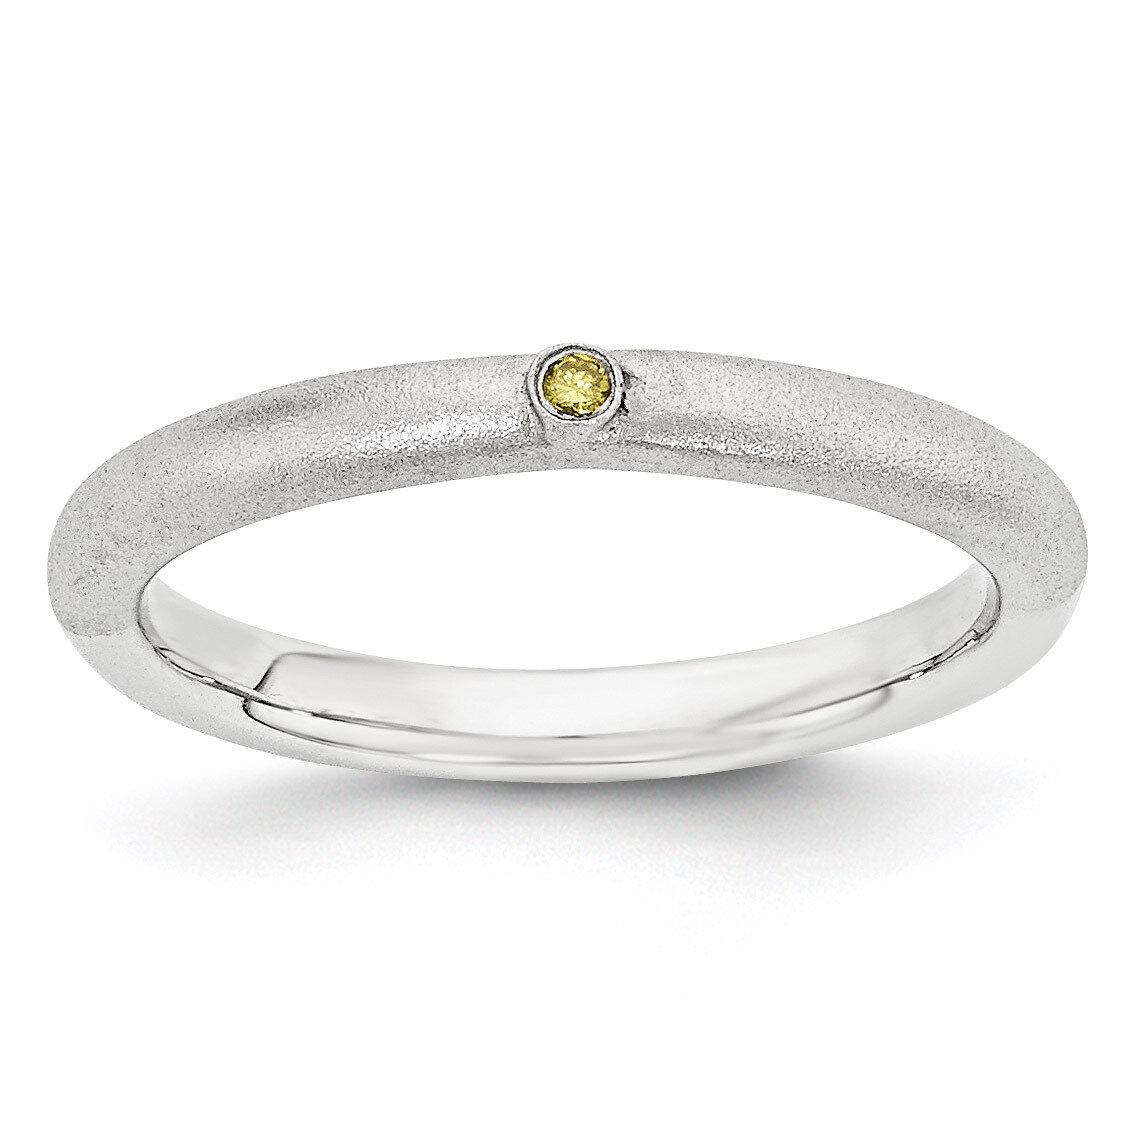 Yellow Diamond Ring Sterling Silver QSK1874